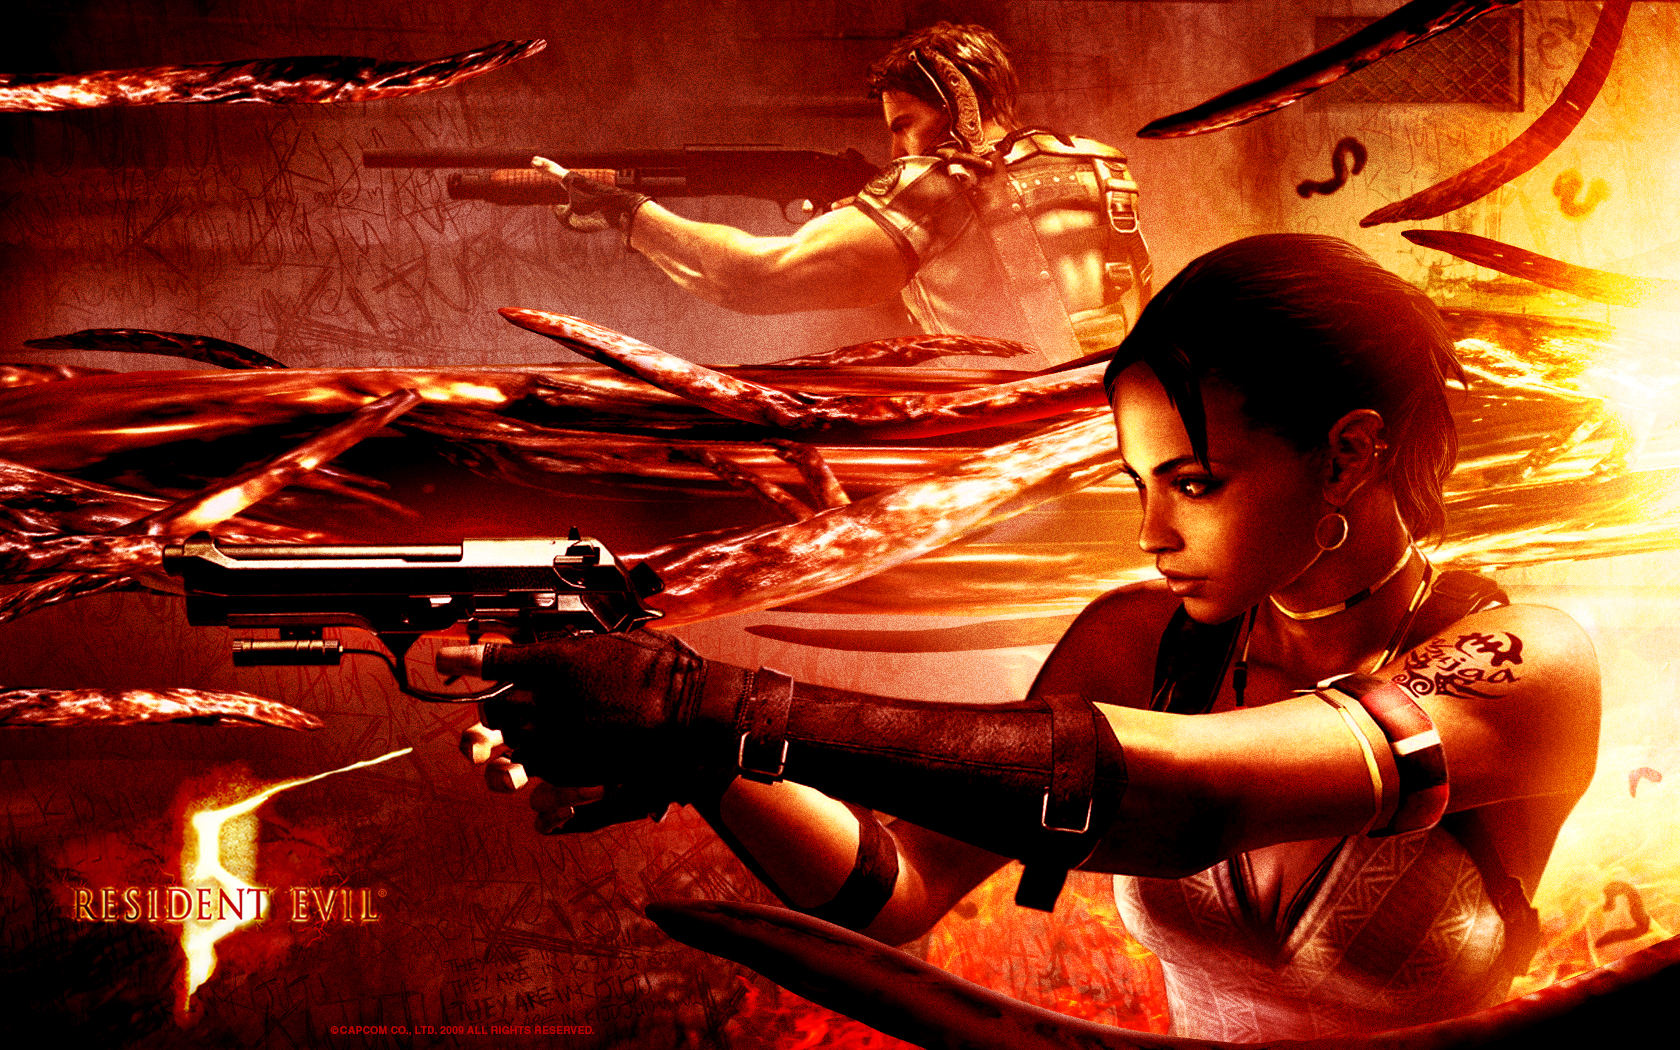  Resident Evil HQ Background Images